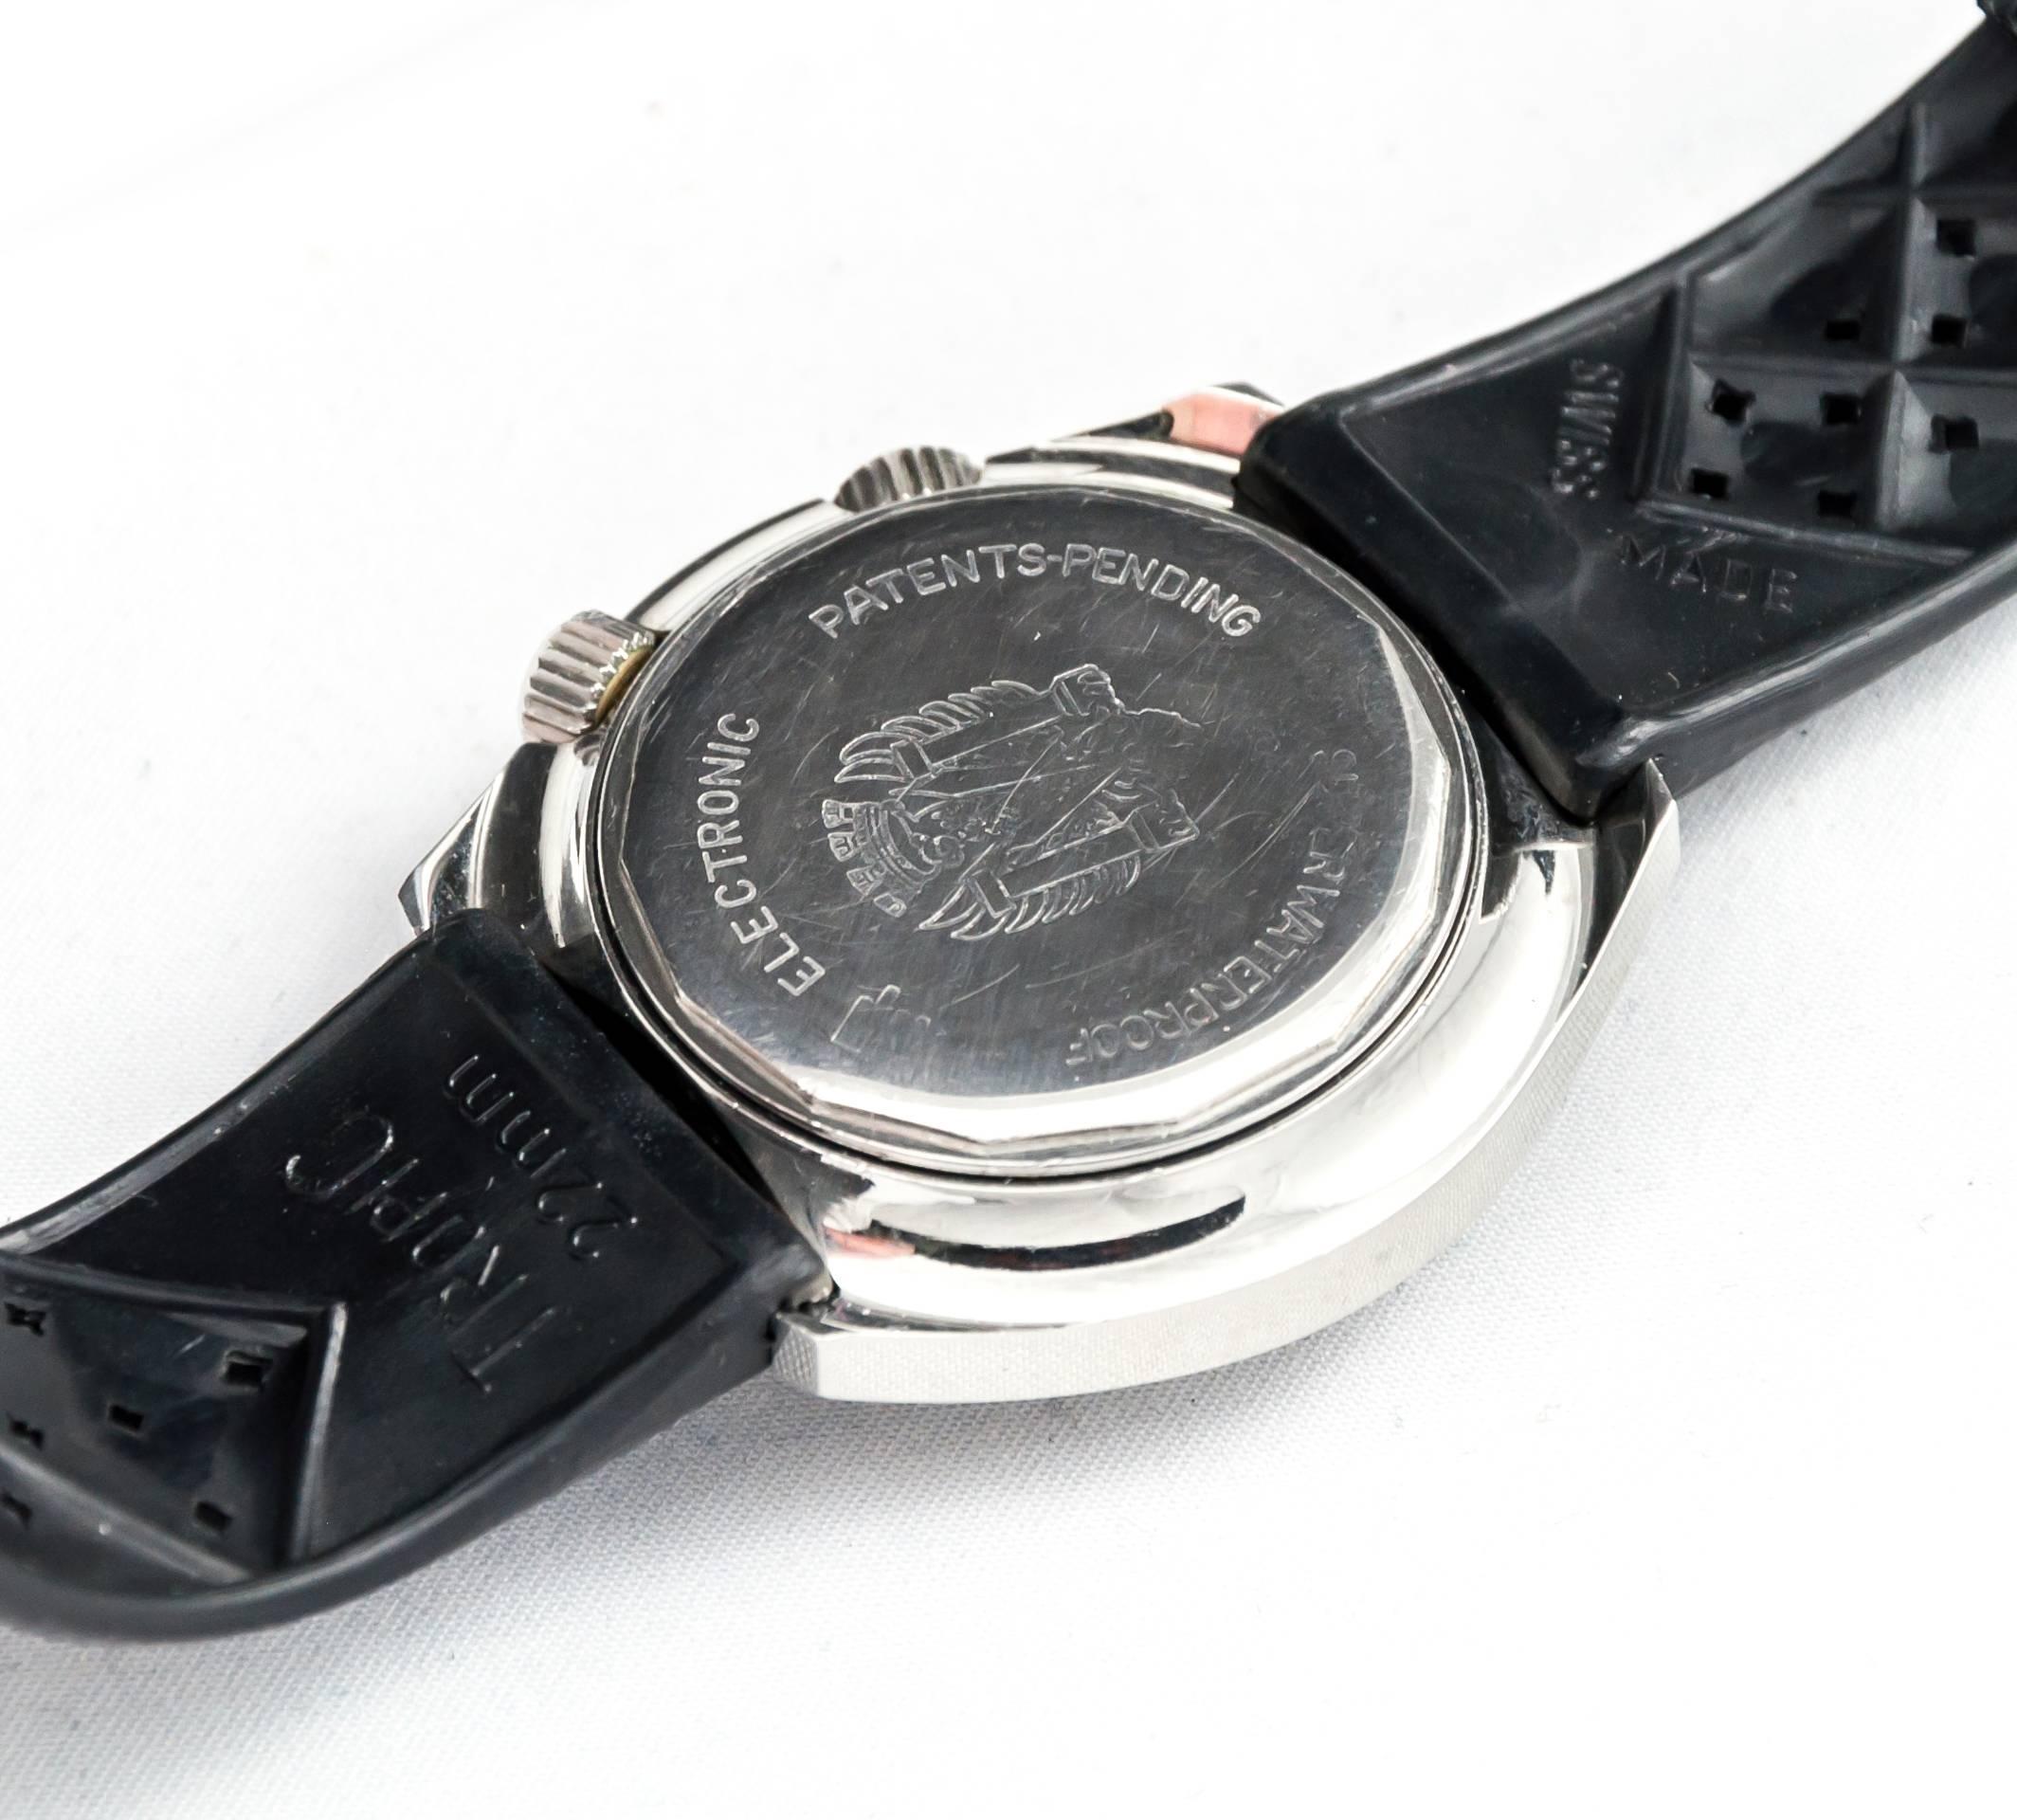 LIP stainless Steel Super Nautic-Ski Electronic Wristwatch, circa 1972 ...